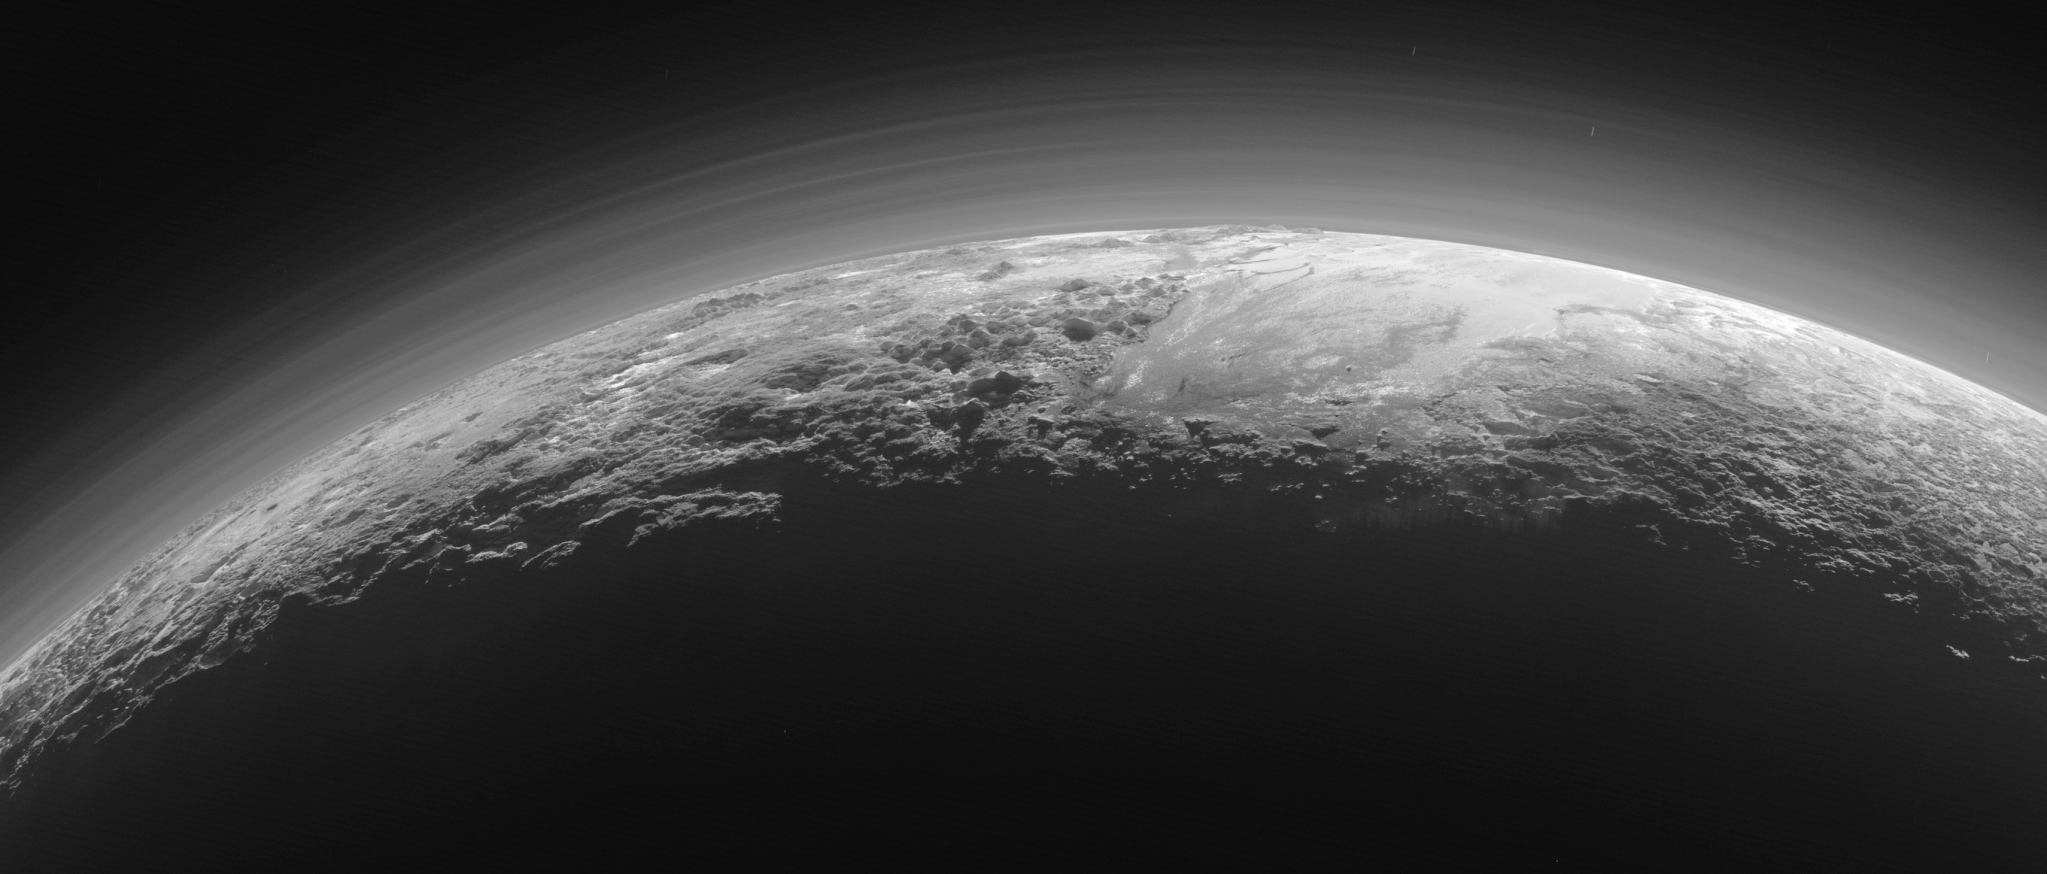 Pluto's mountains, frozen plains and foggy hazes.